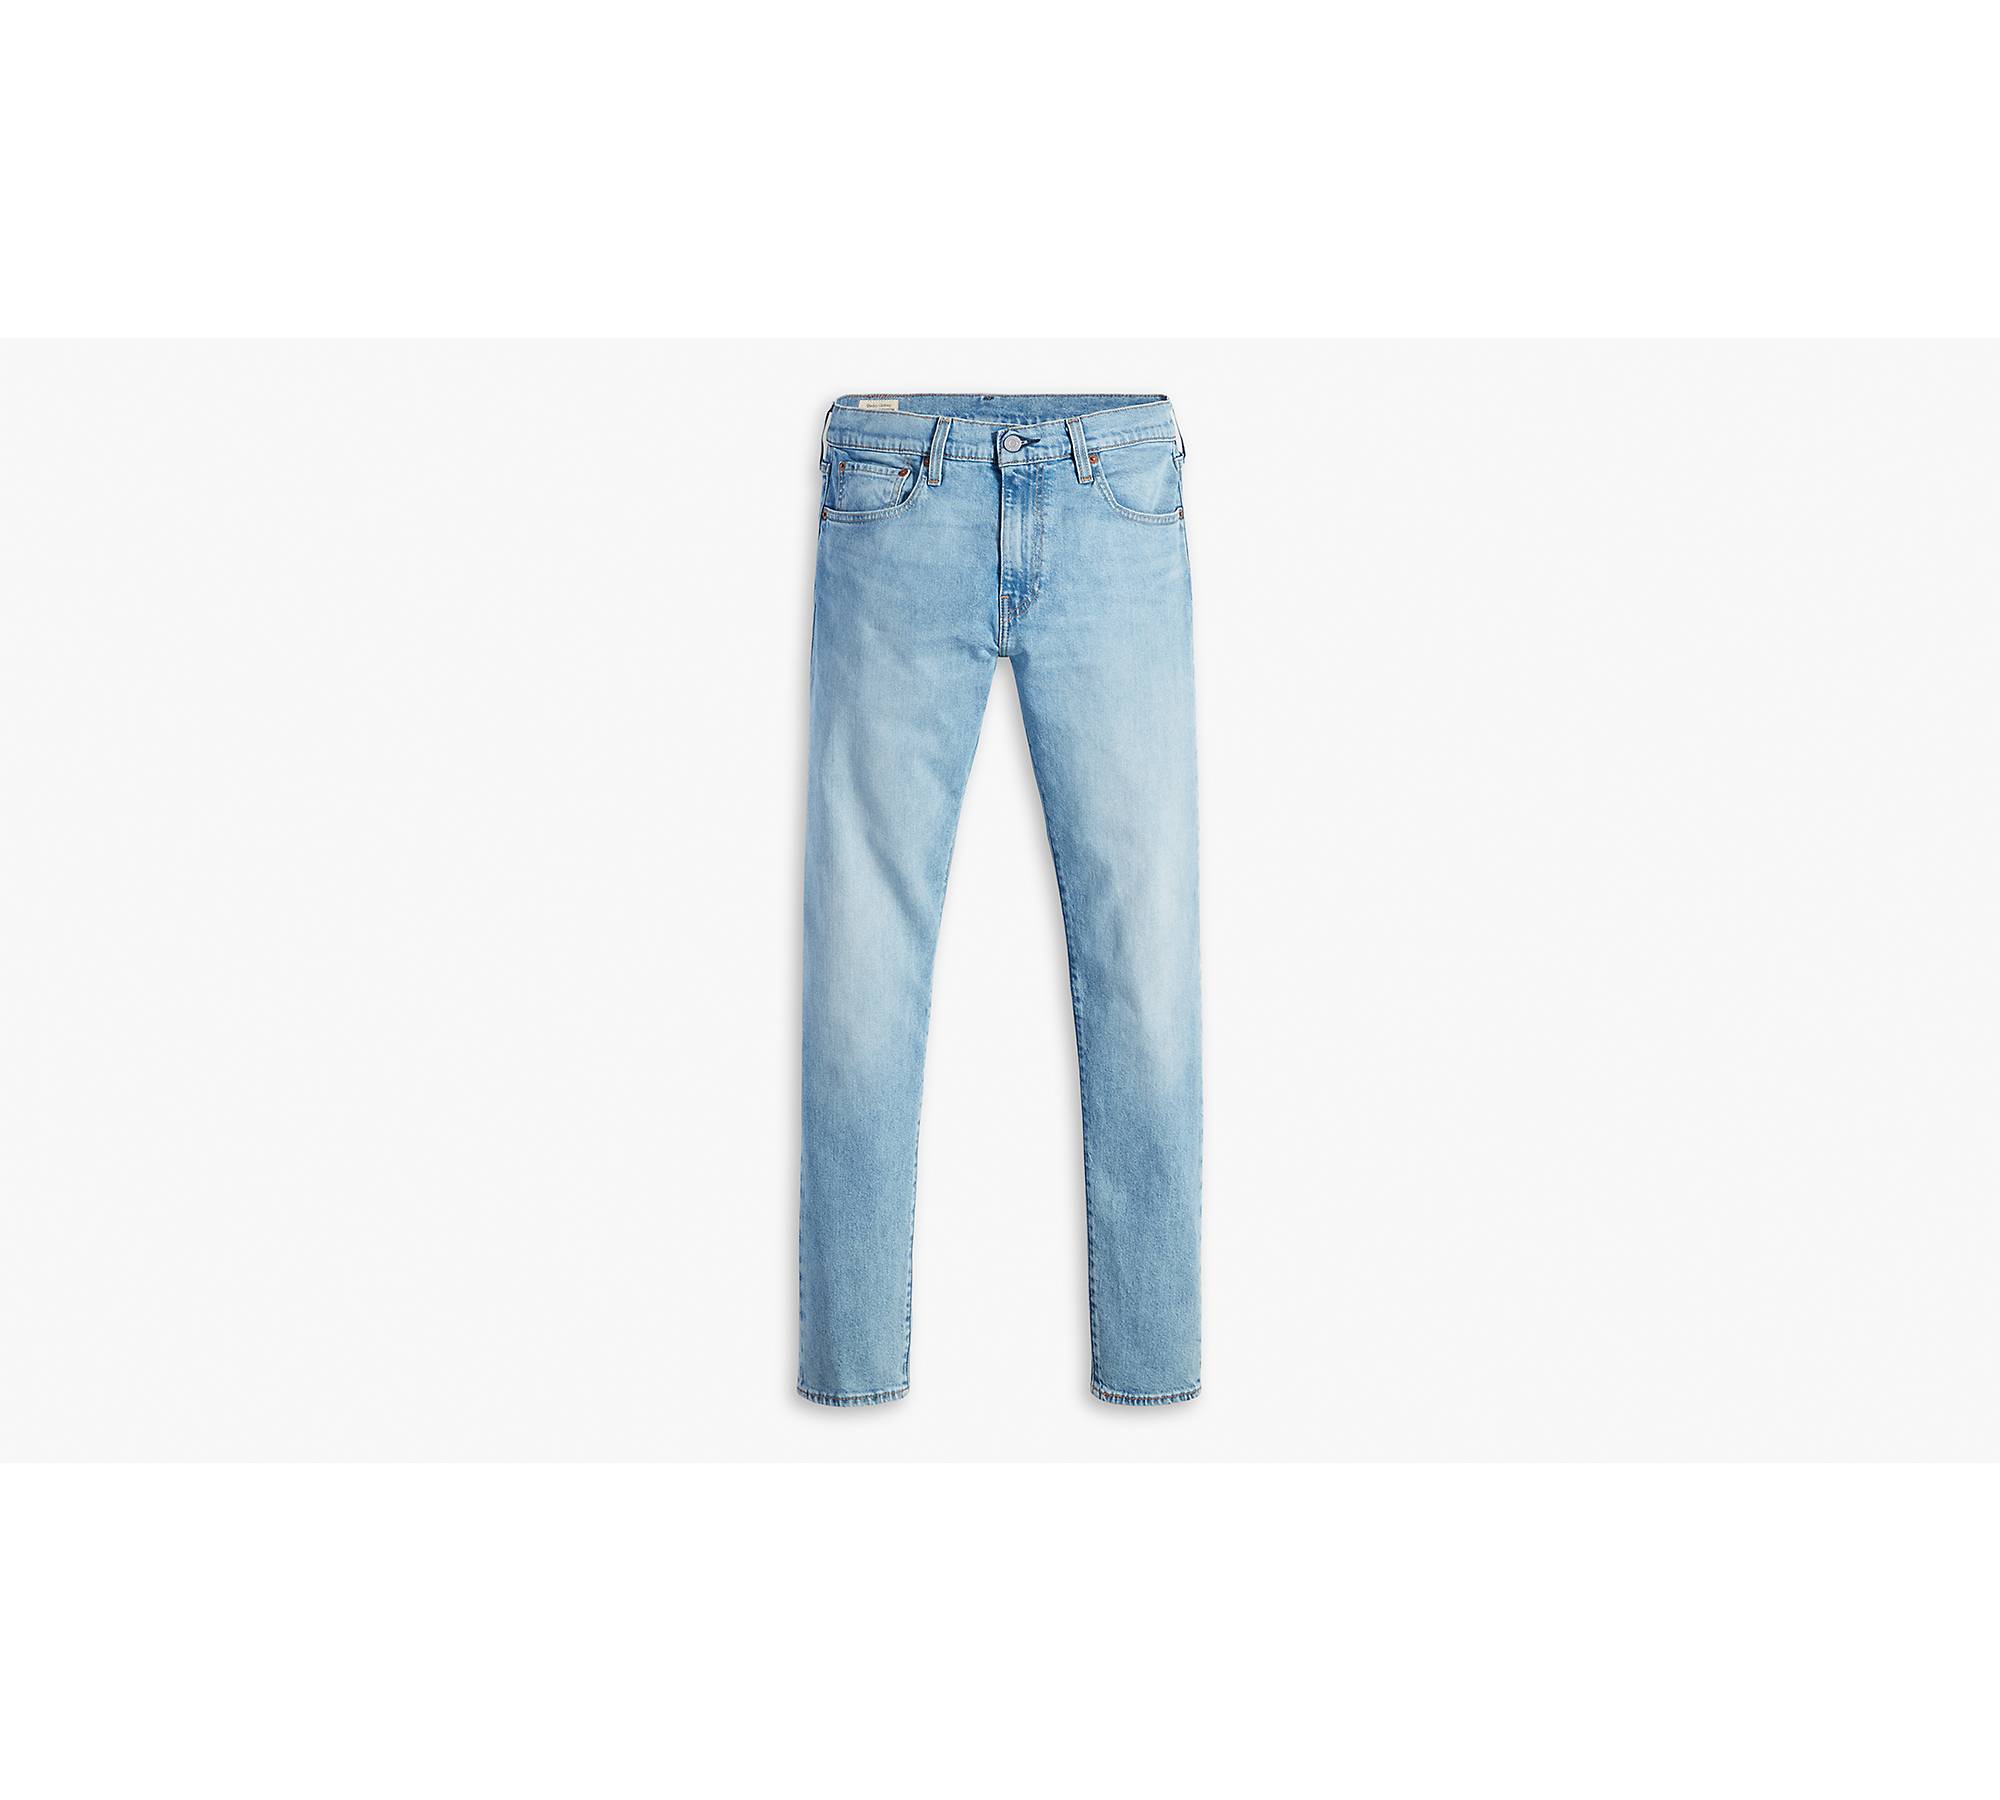 Levi's 512 Slim Taper Fit Men's Jeans - Pictorial 38 x 32